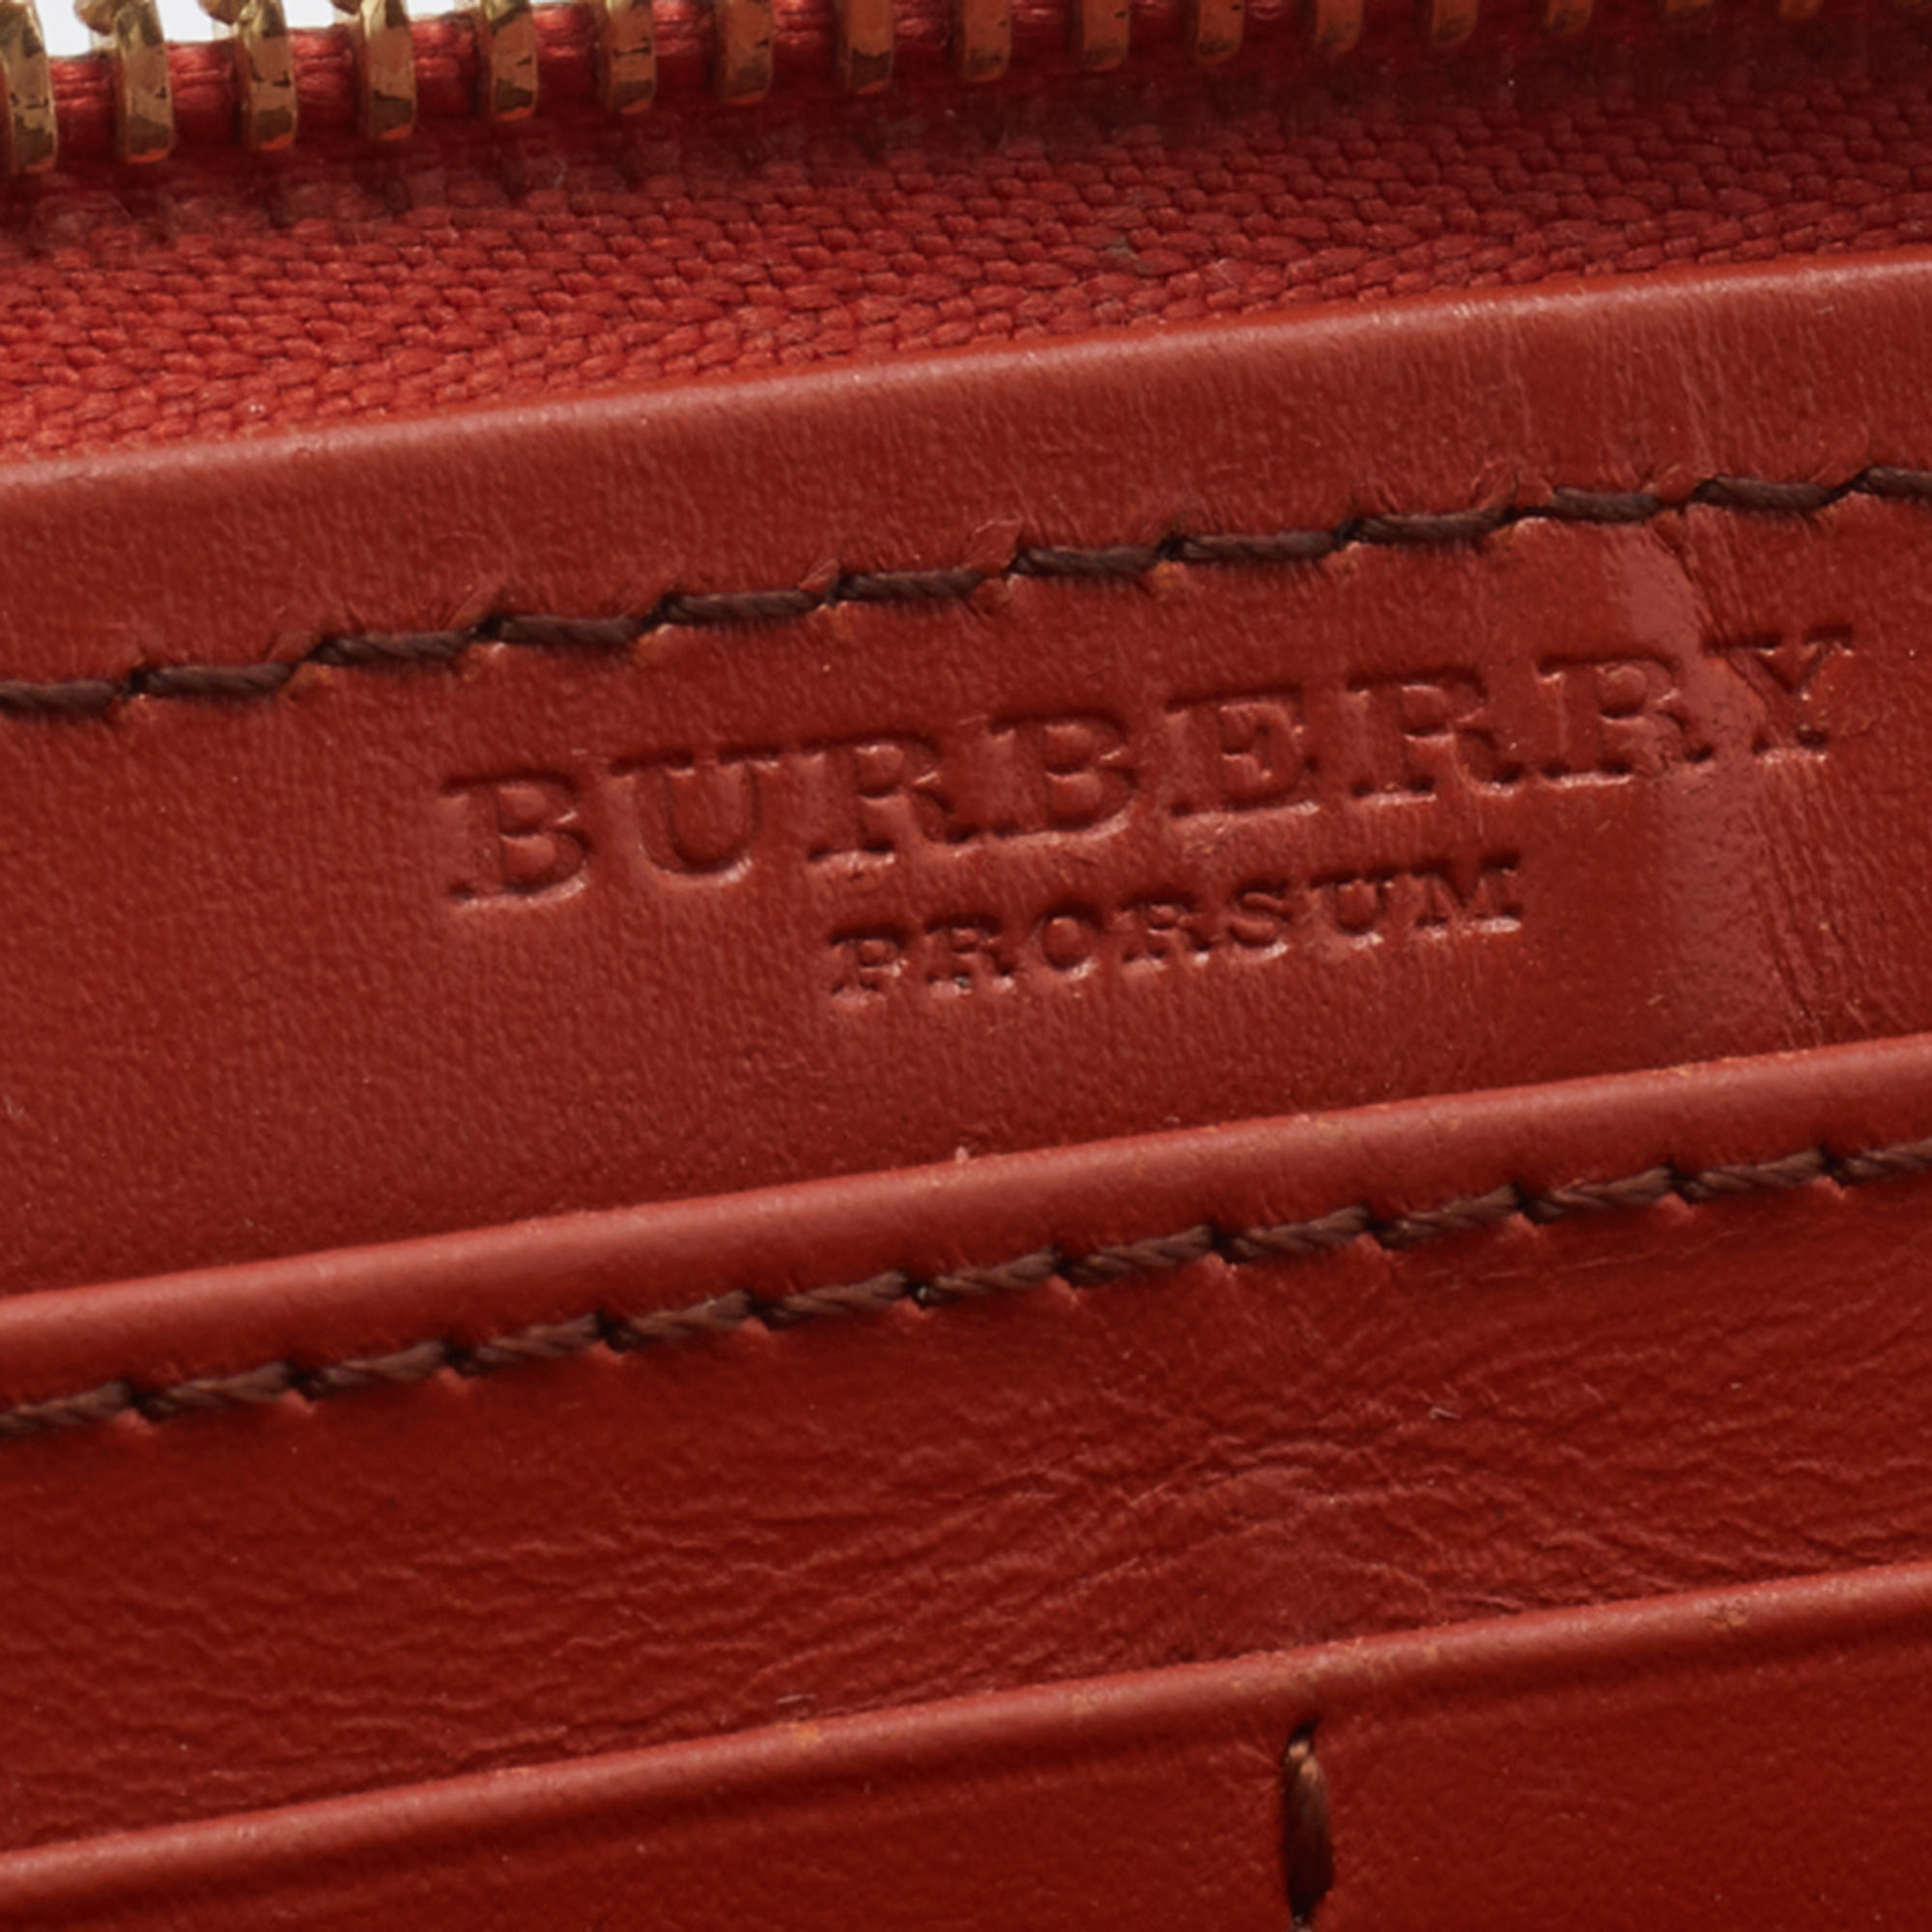 Burberry Prorsum Orange Leather Zip Around Wallet